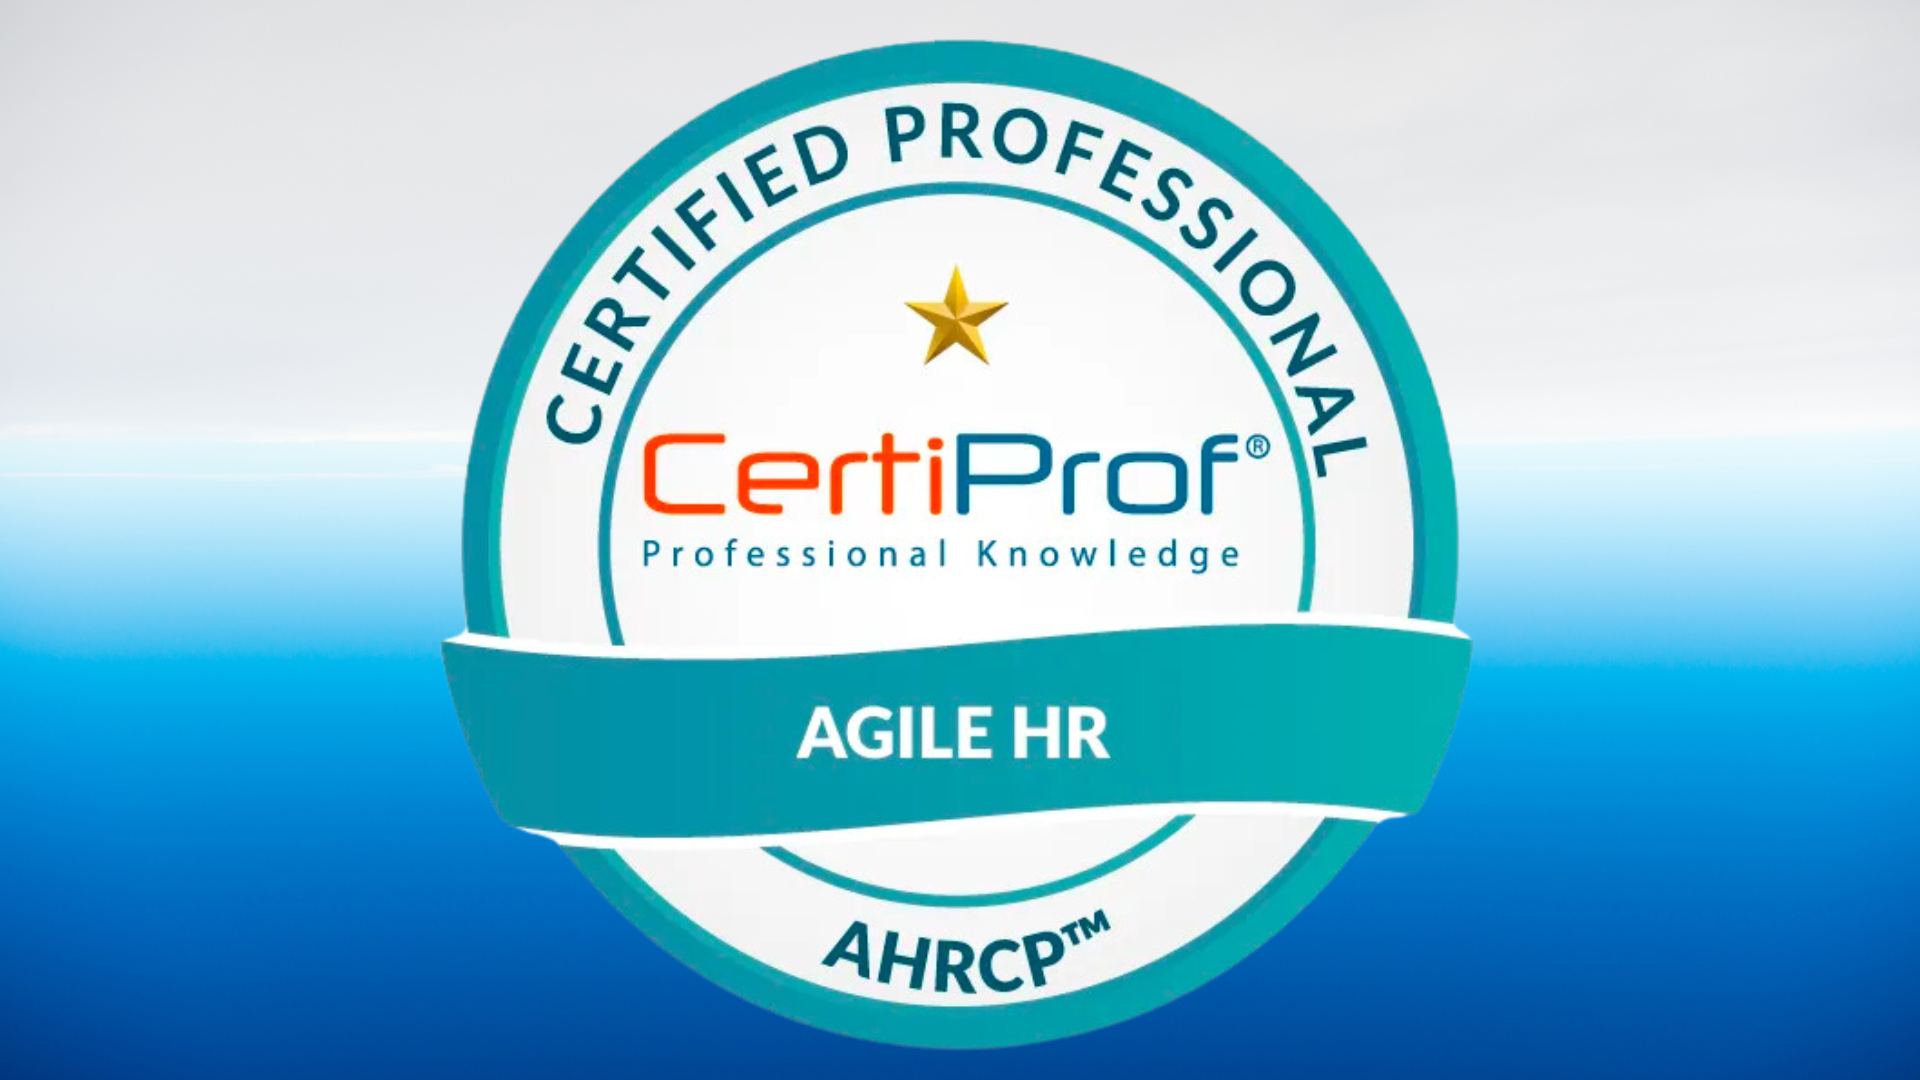 Certificación Agile HR Certified Professional - AHRCP™